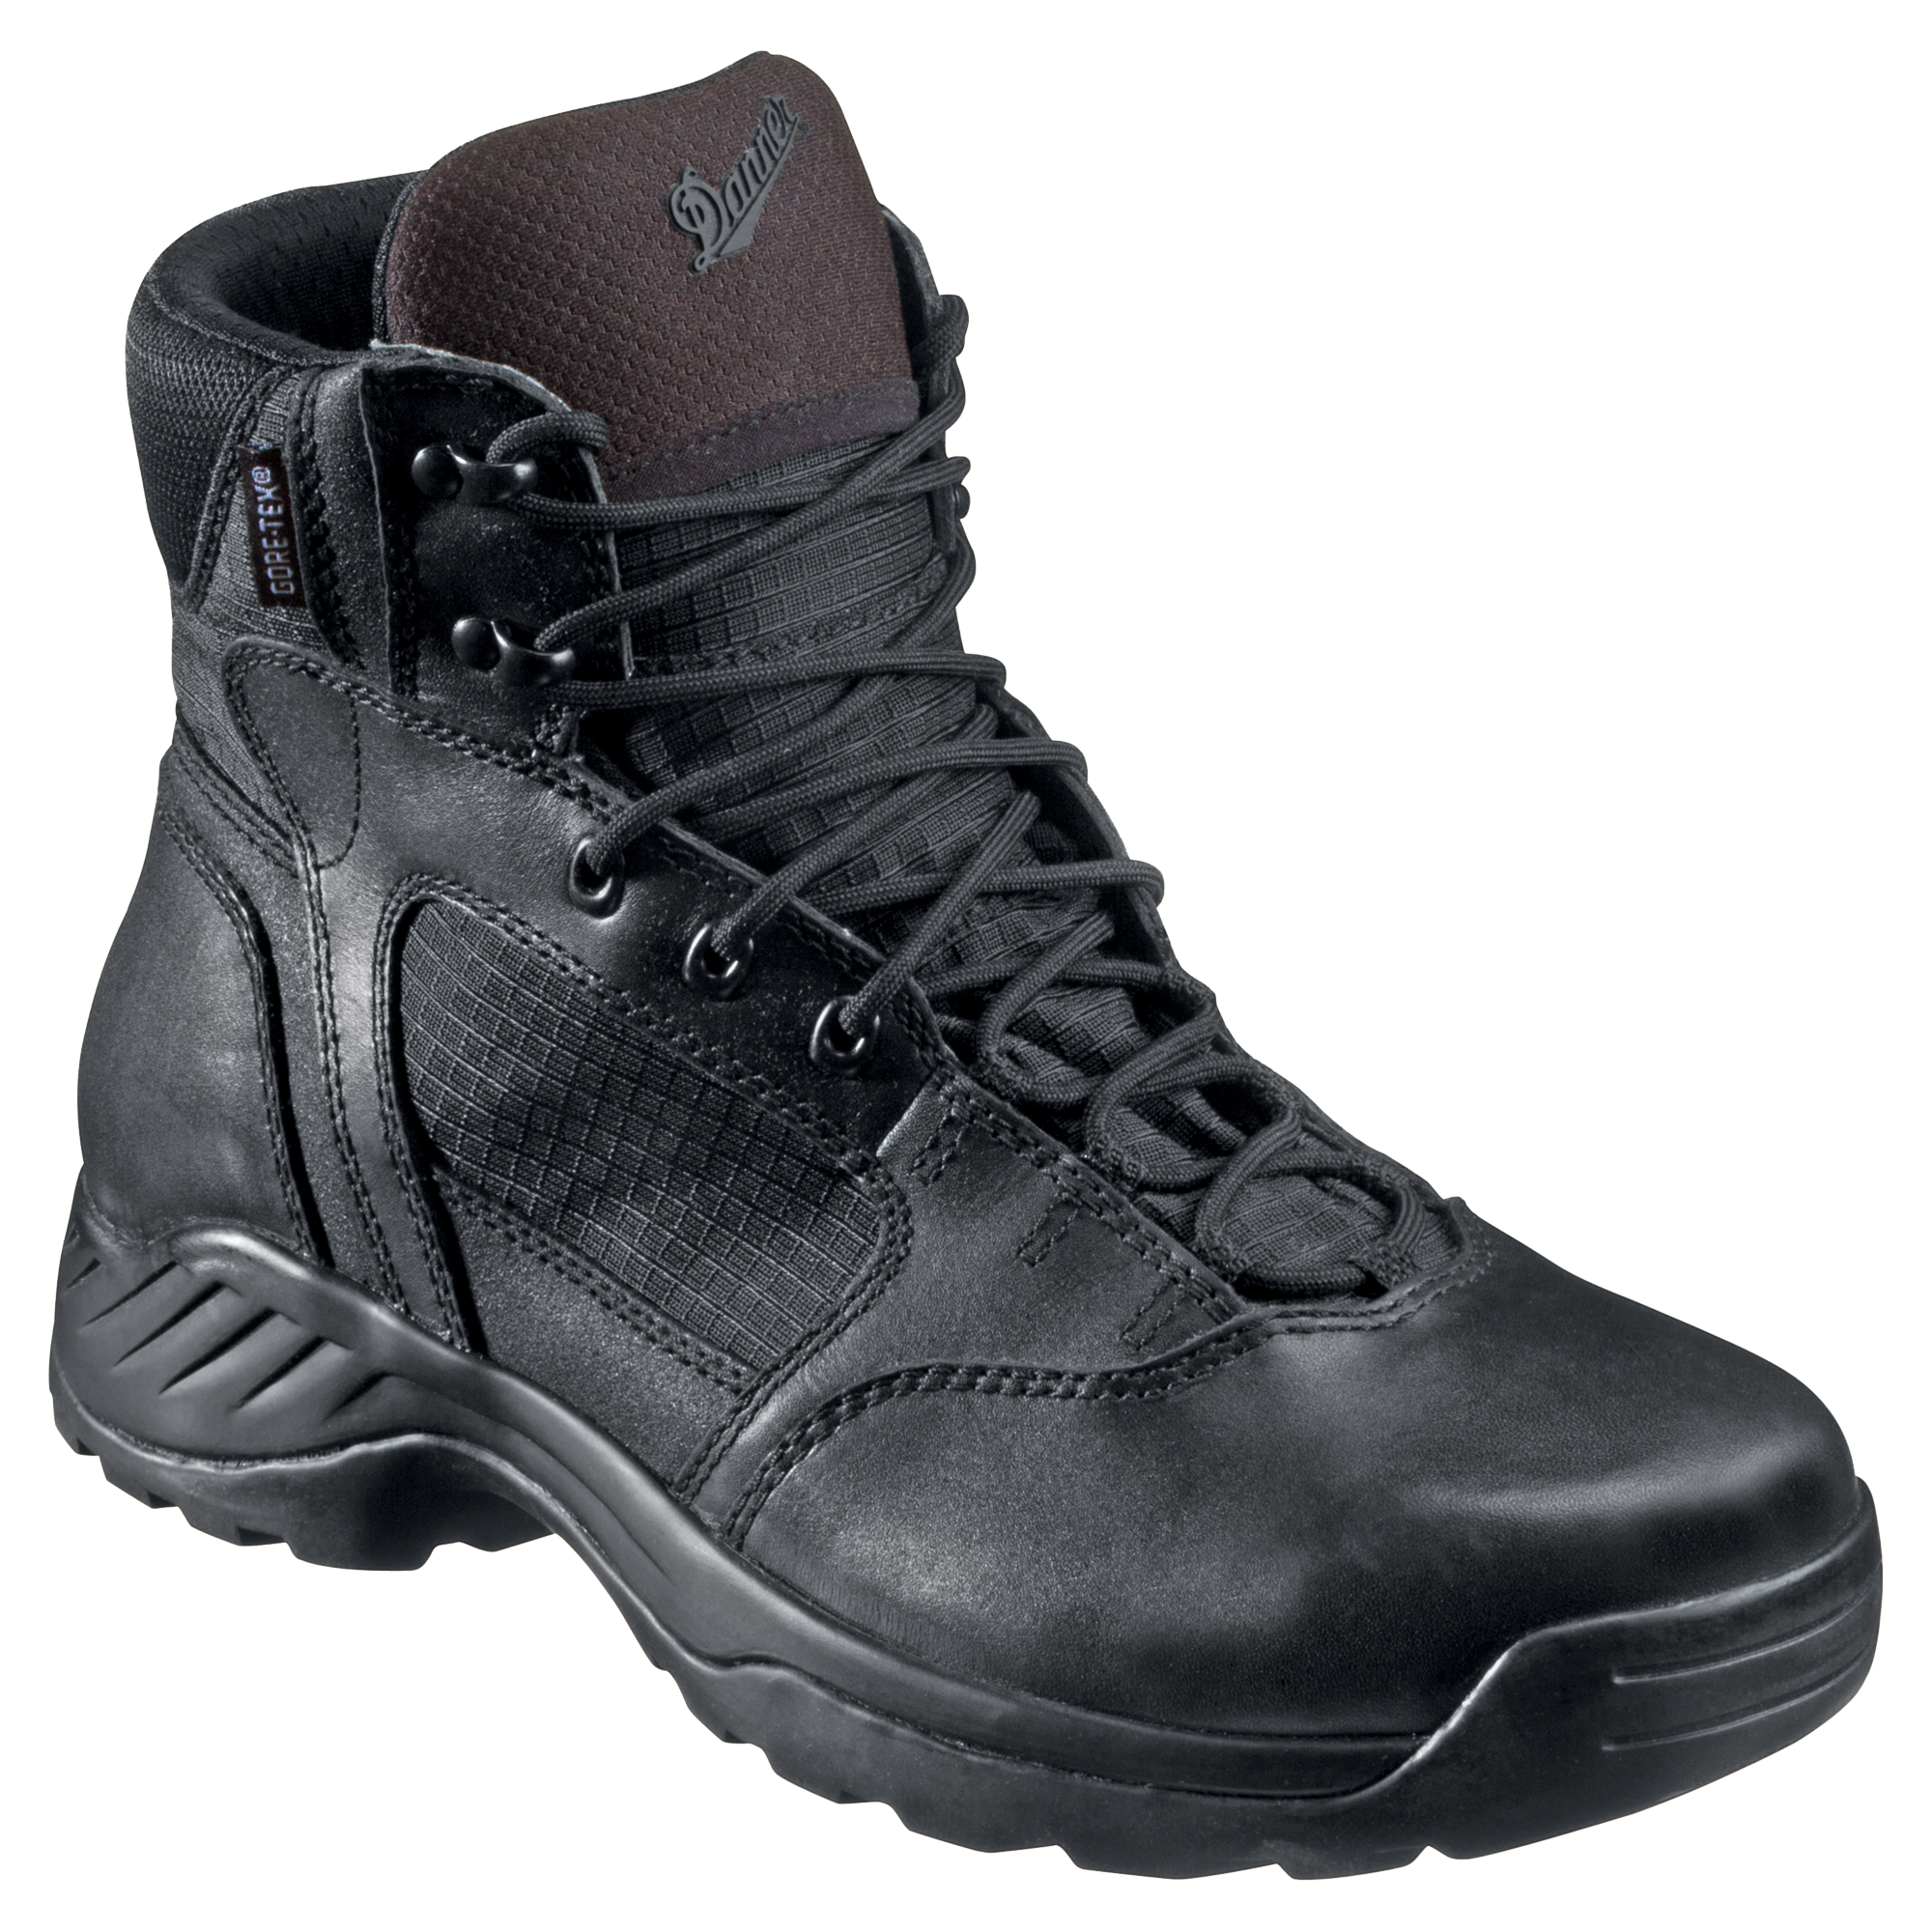 Danner Kinetic Side-Zip GORE-TEX Work Boots for Men - Black - 9M